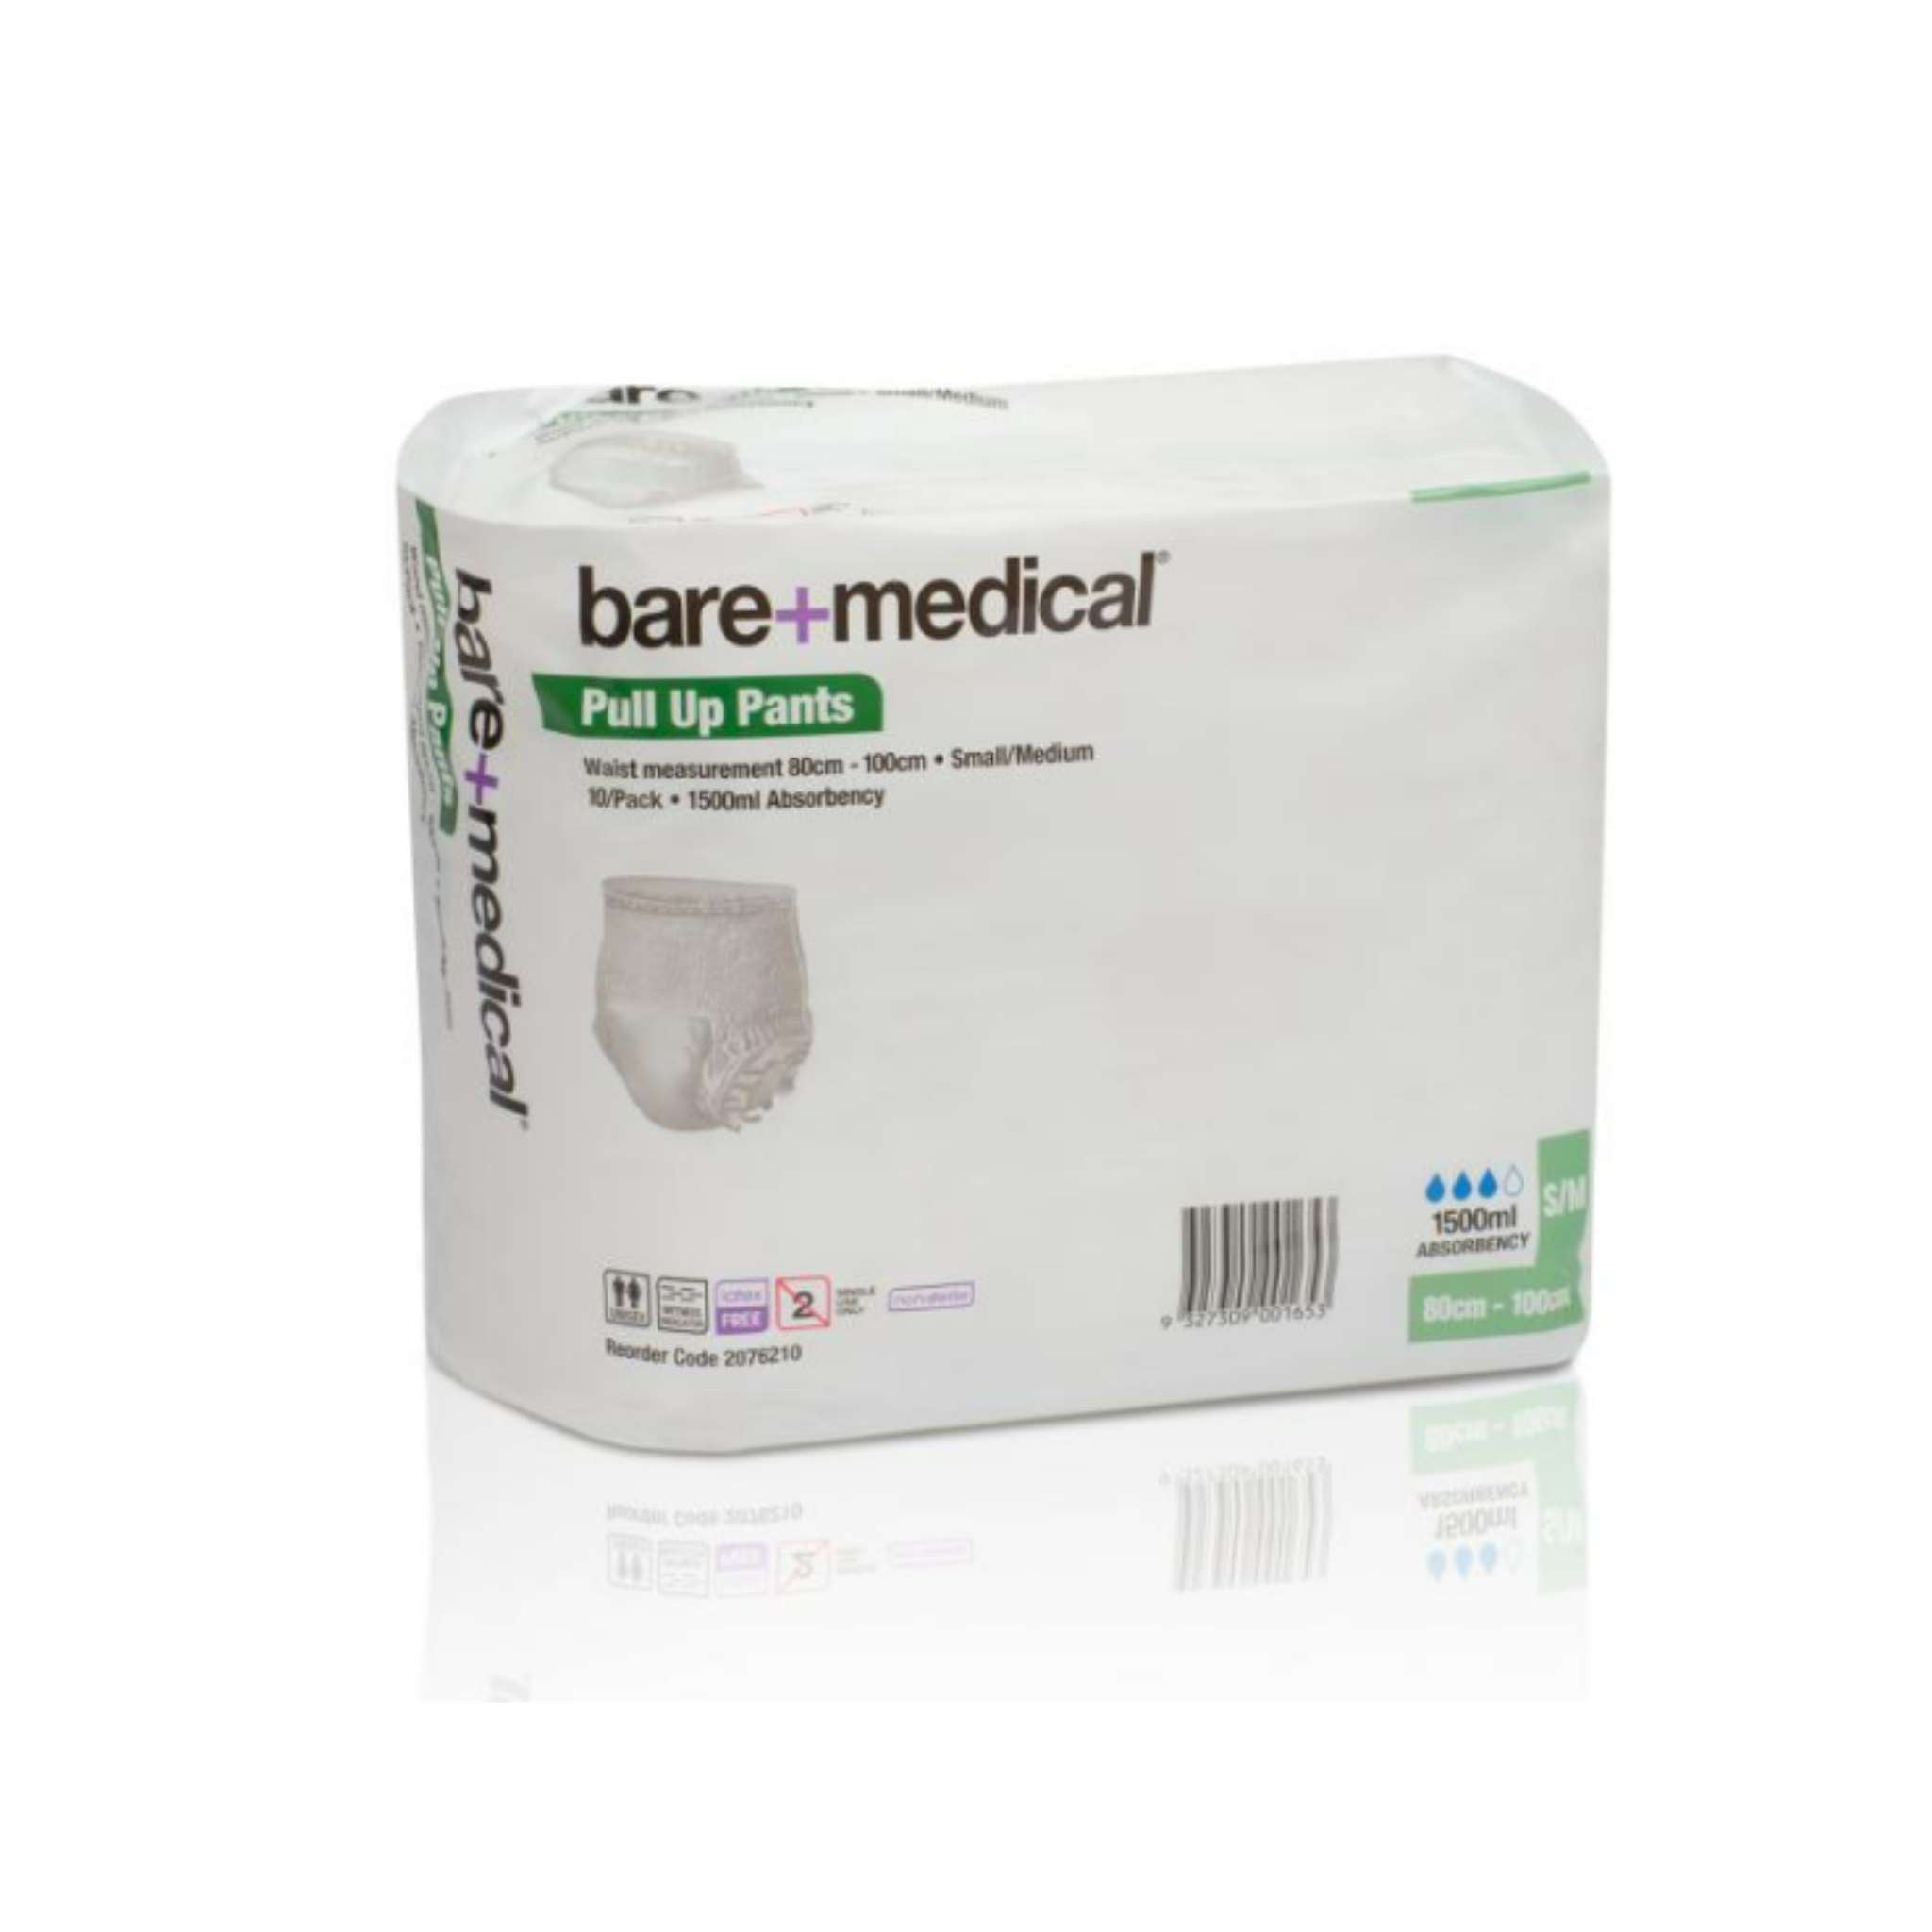 Bare Medical Pull-up Pant 1500ml - Small/Medium, Packet